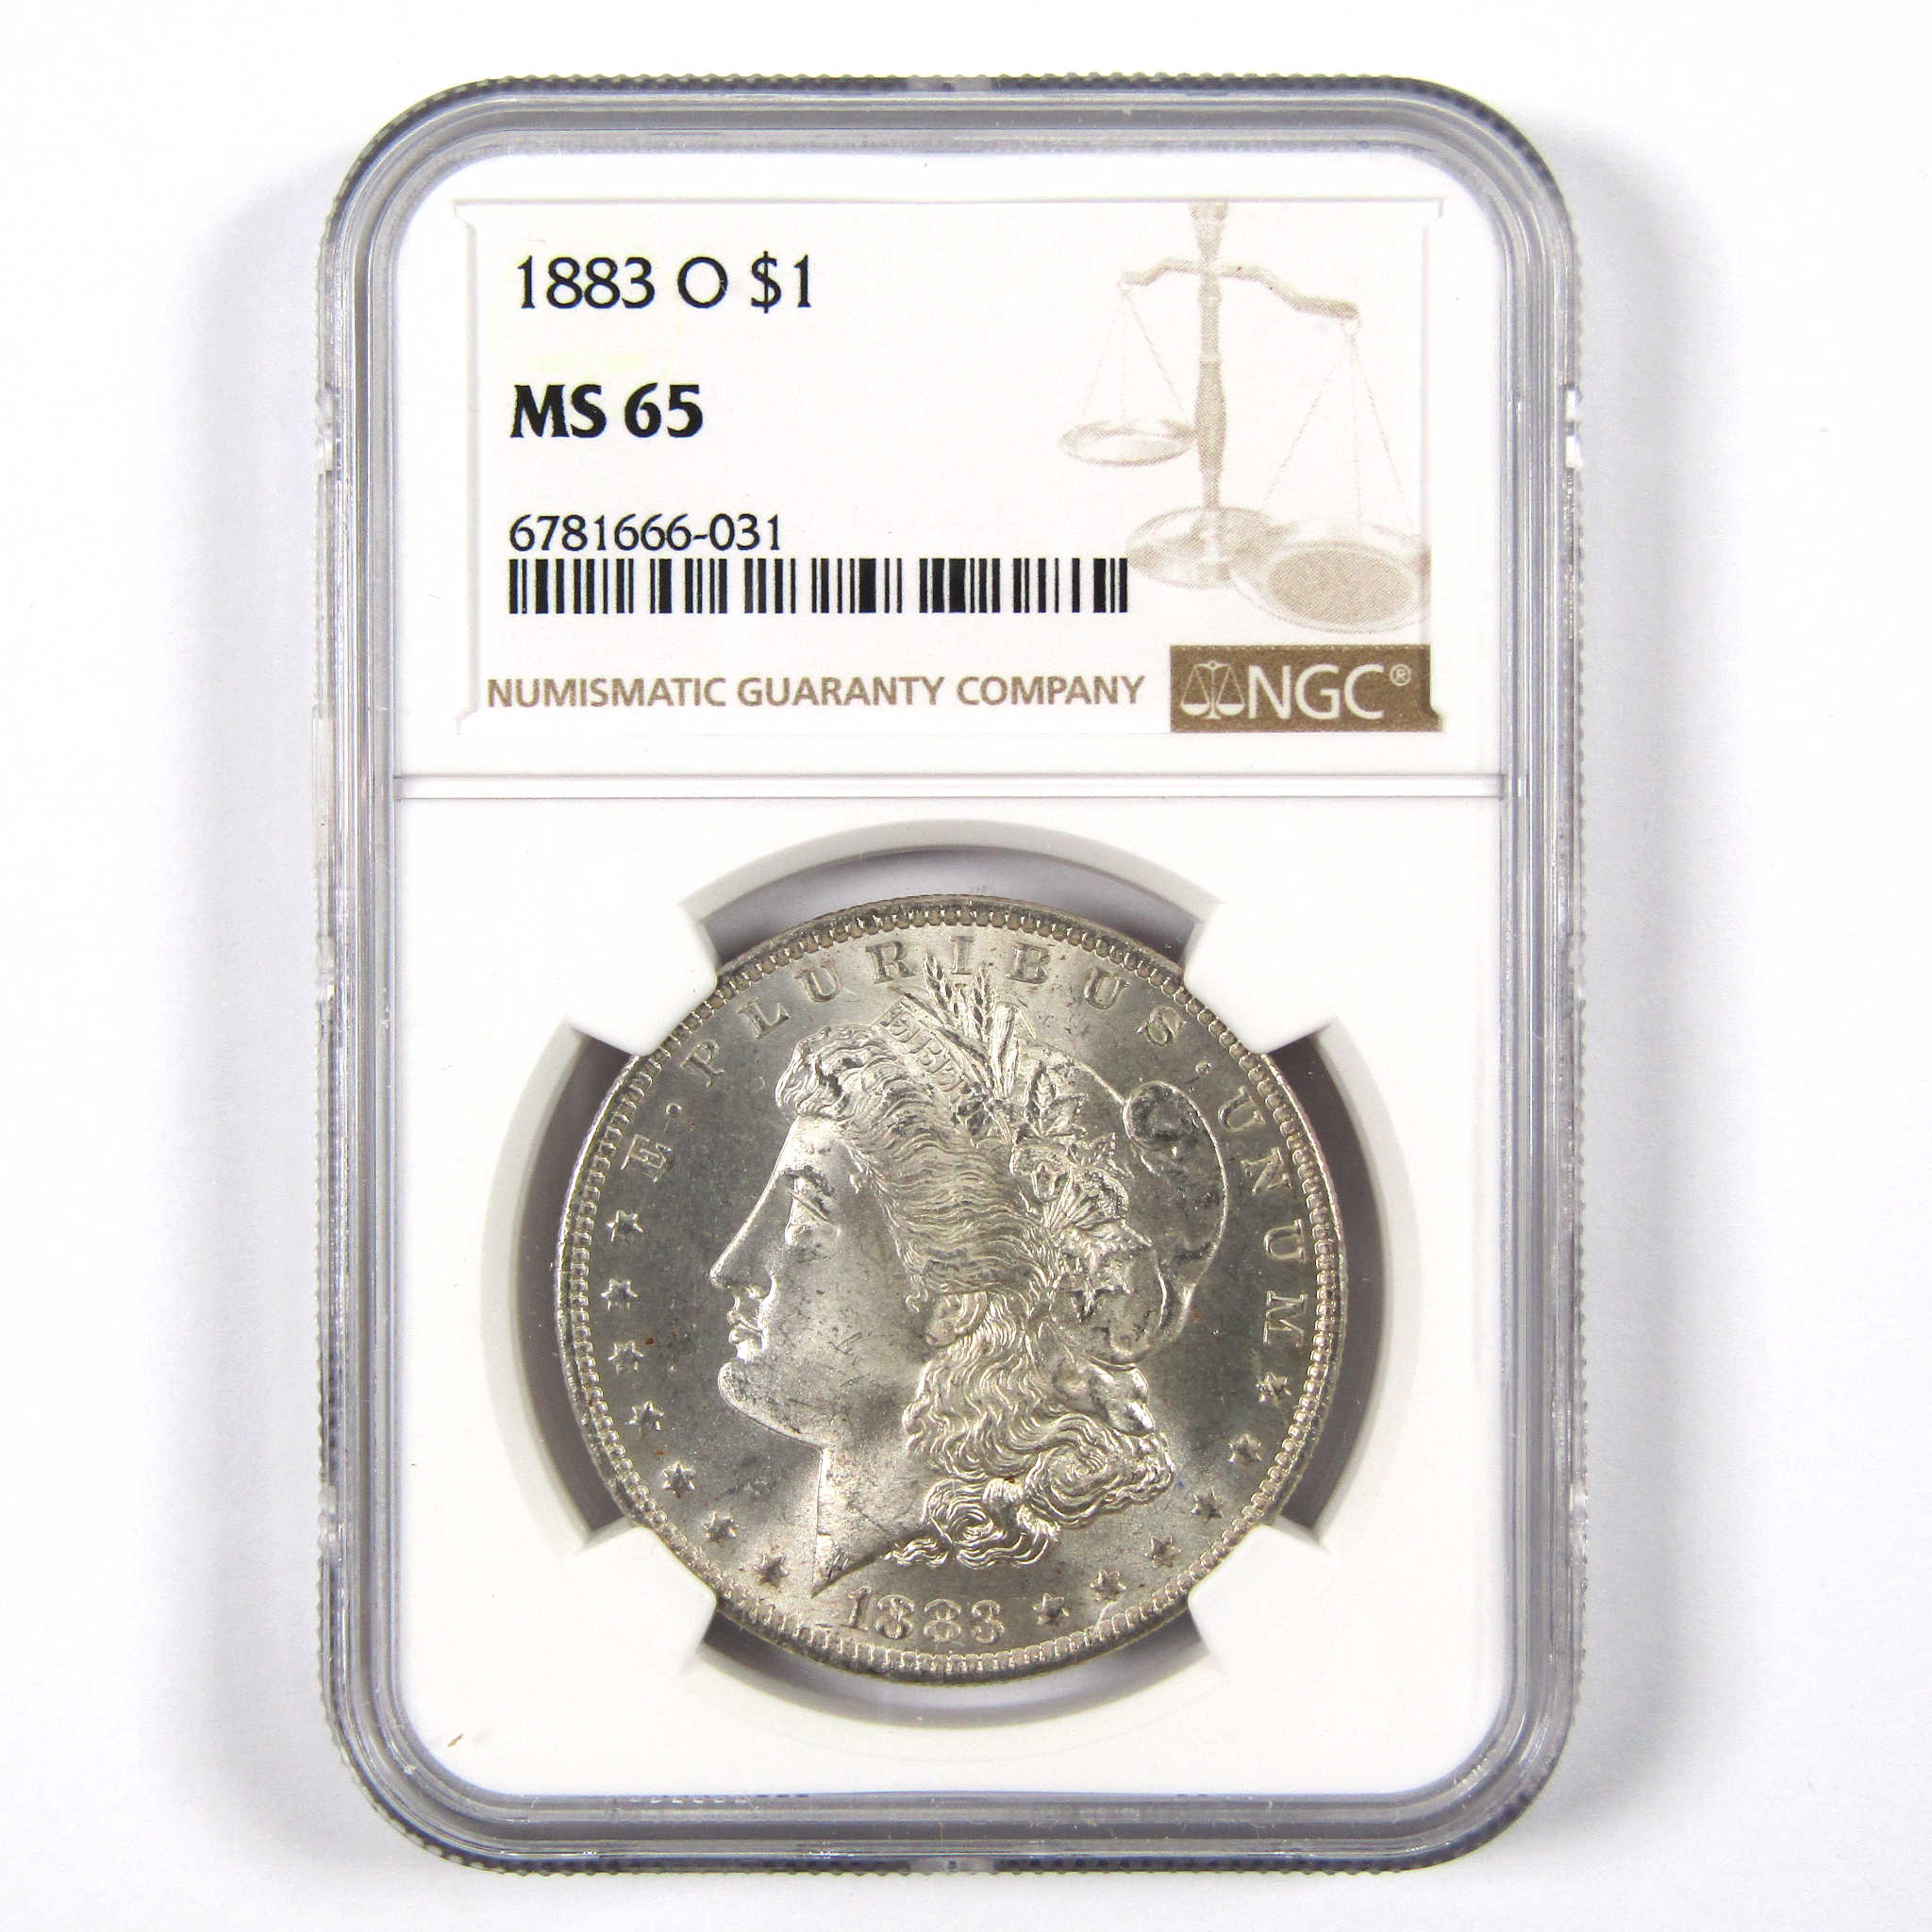 1883 O Morgan Dollar MS 65 NGC 90% Silver Uncirculated Coin SKU:I6150 - Morgan coin - Morgan silver dollar - Morgan silver dollar for sale - Profile Coins &amp; Collectibles